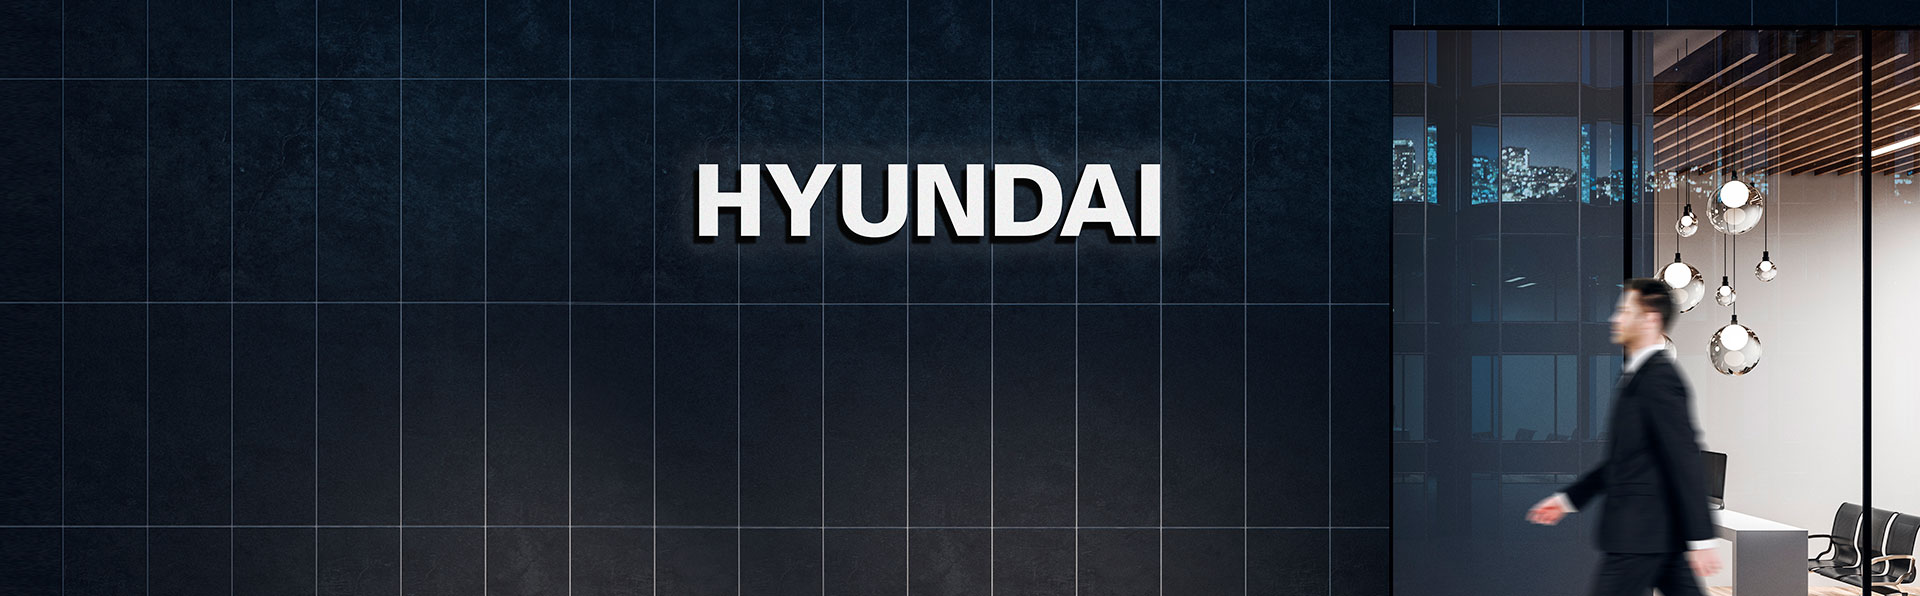 О компании Hyundai